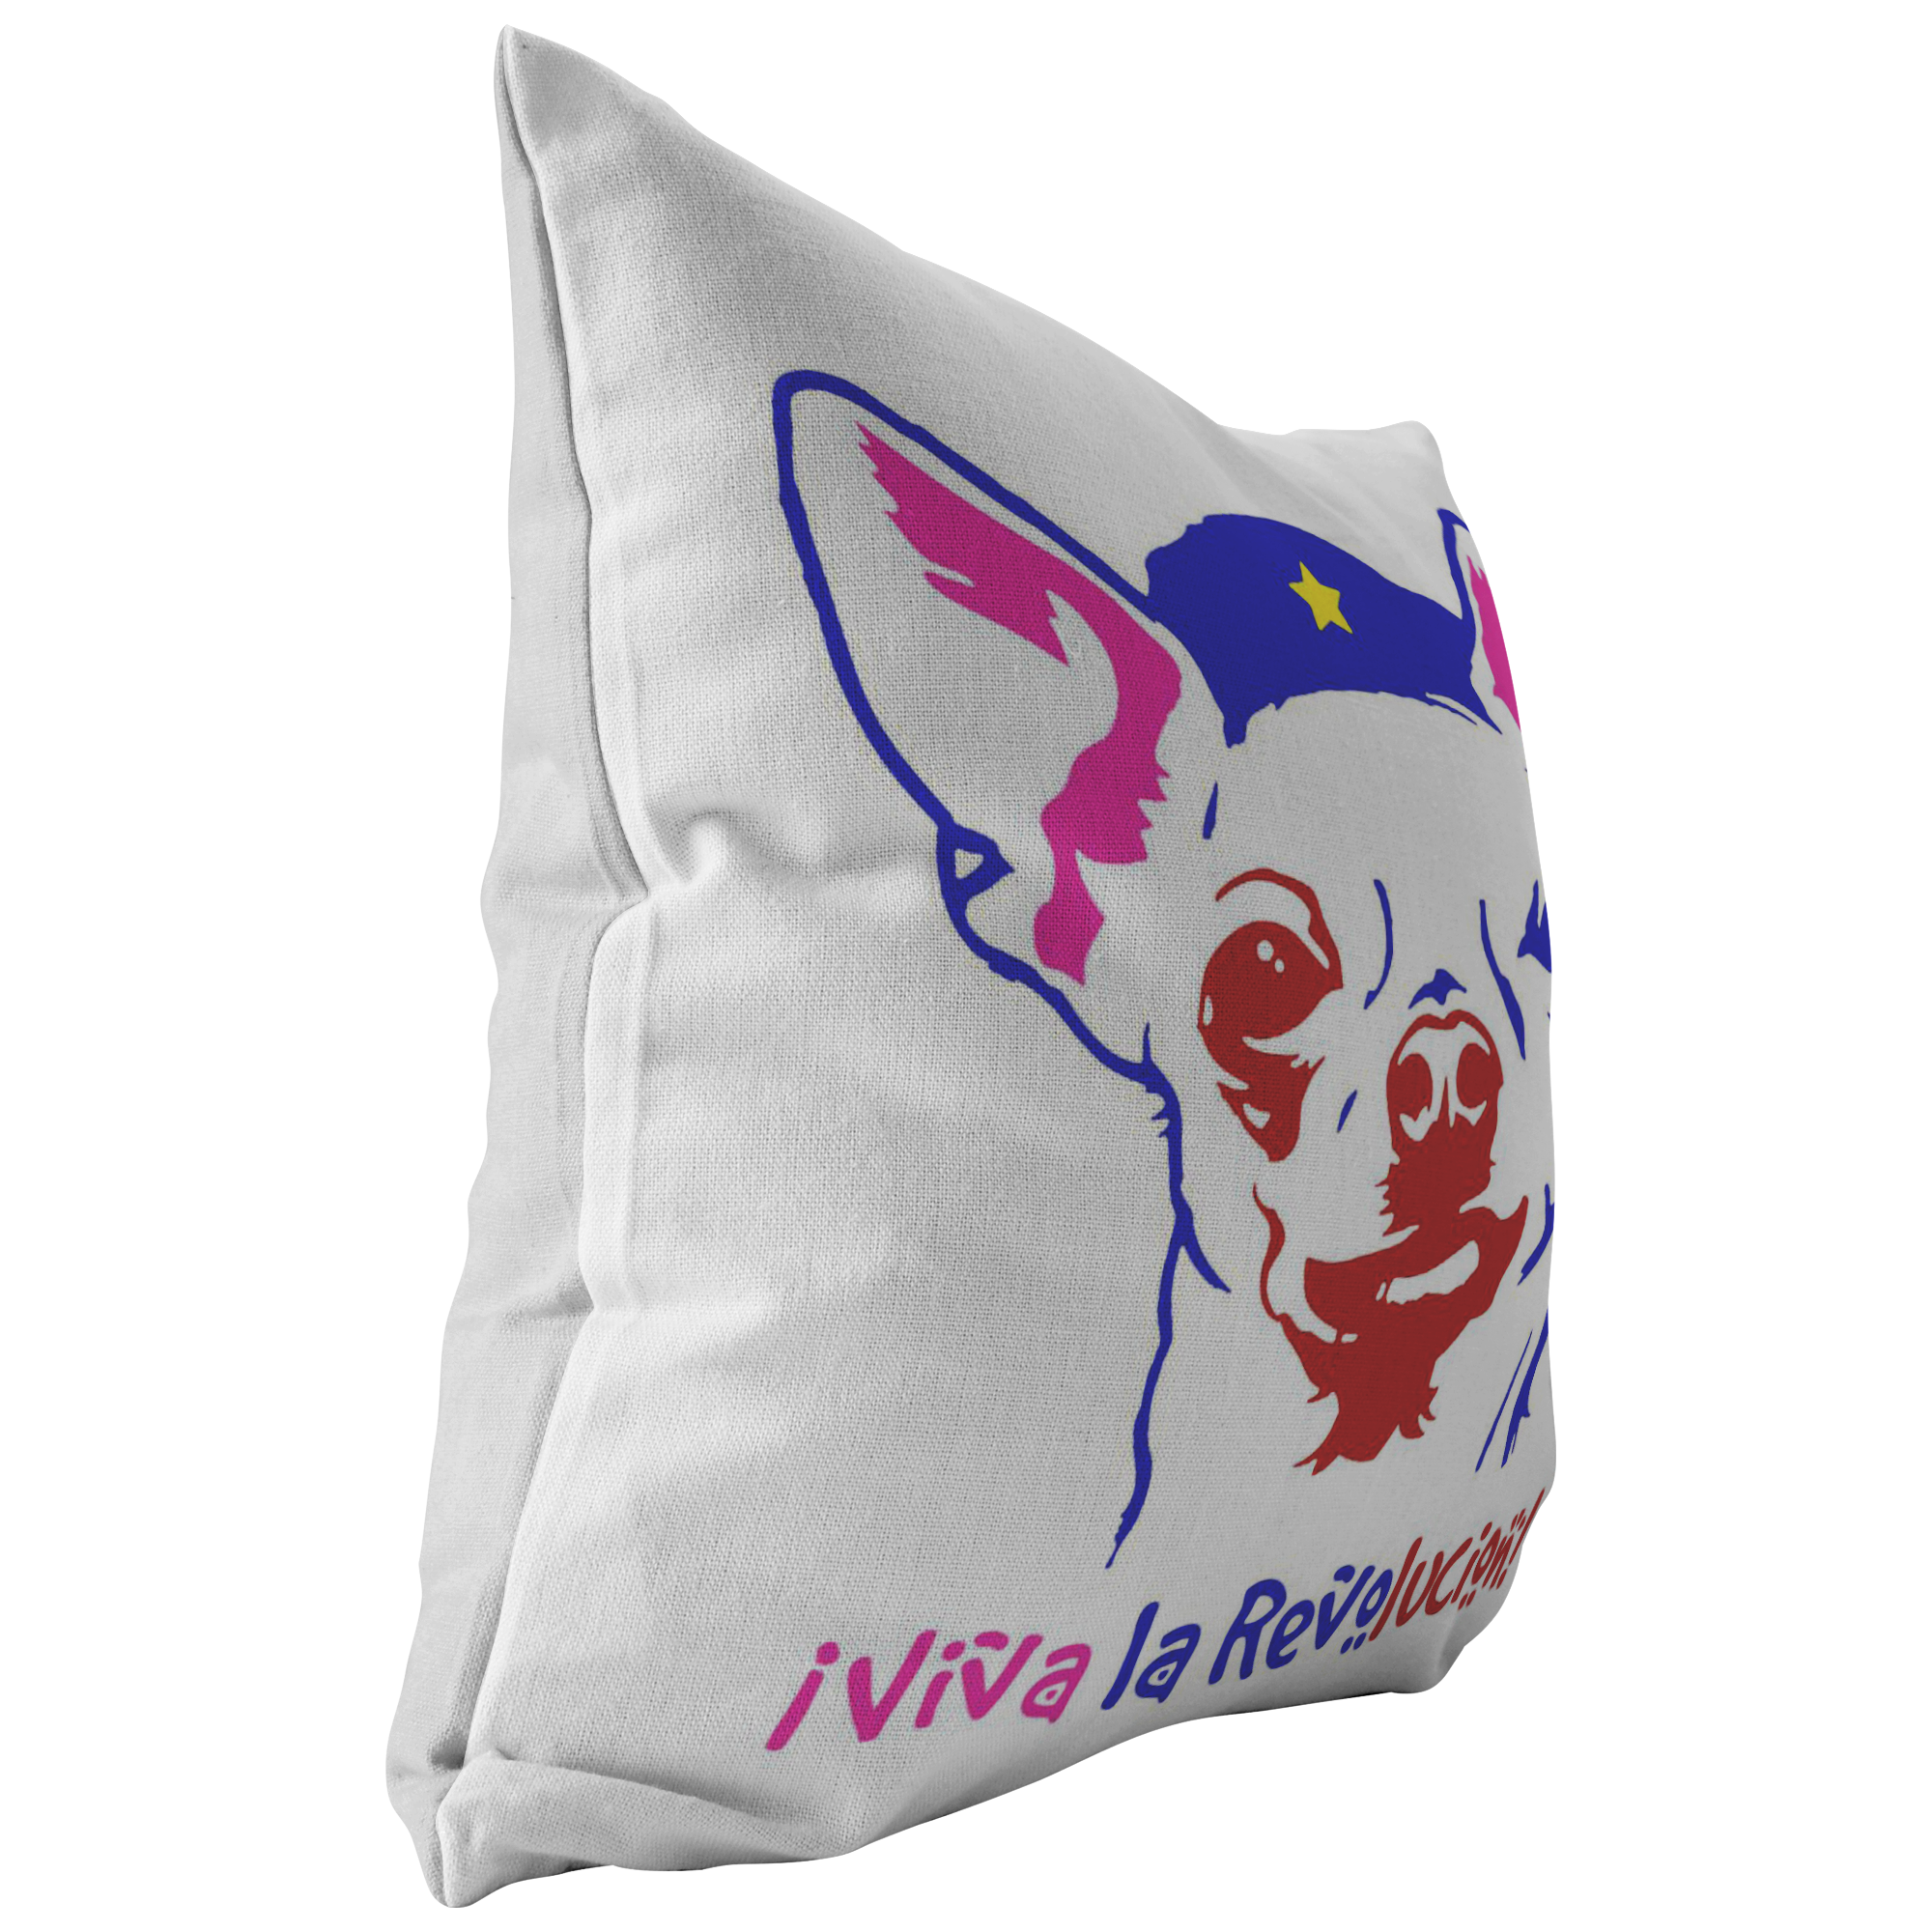 Chihuahua Revolution - Pillow